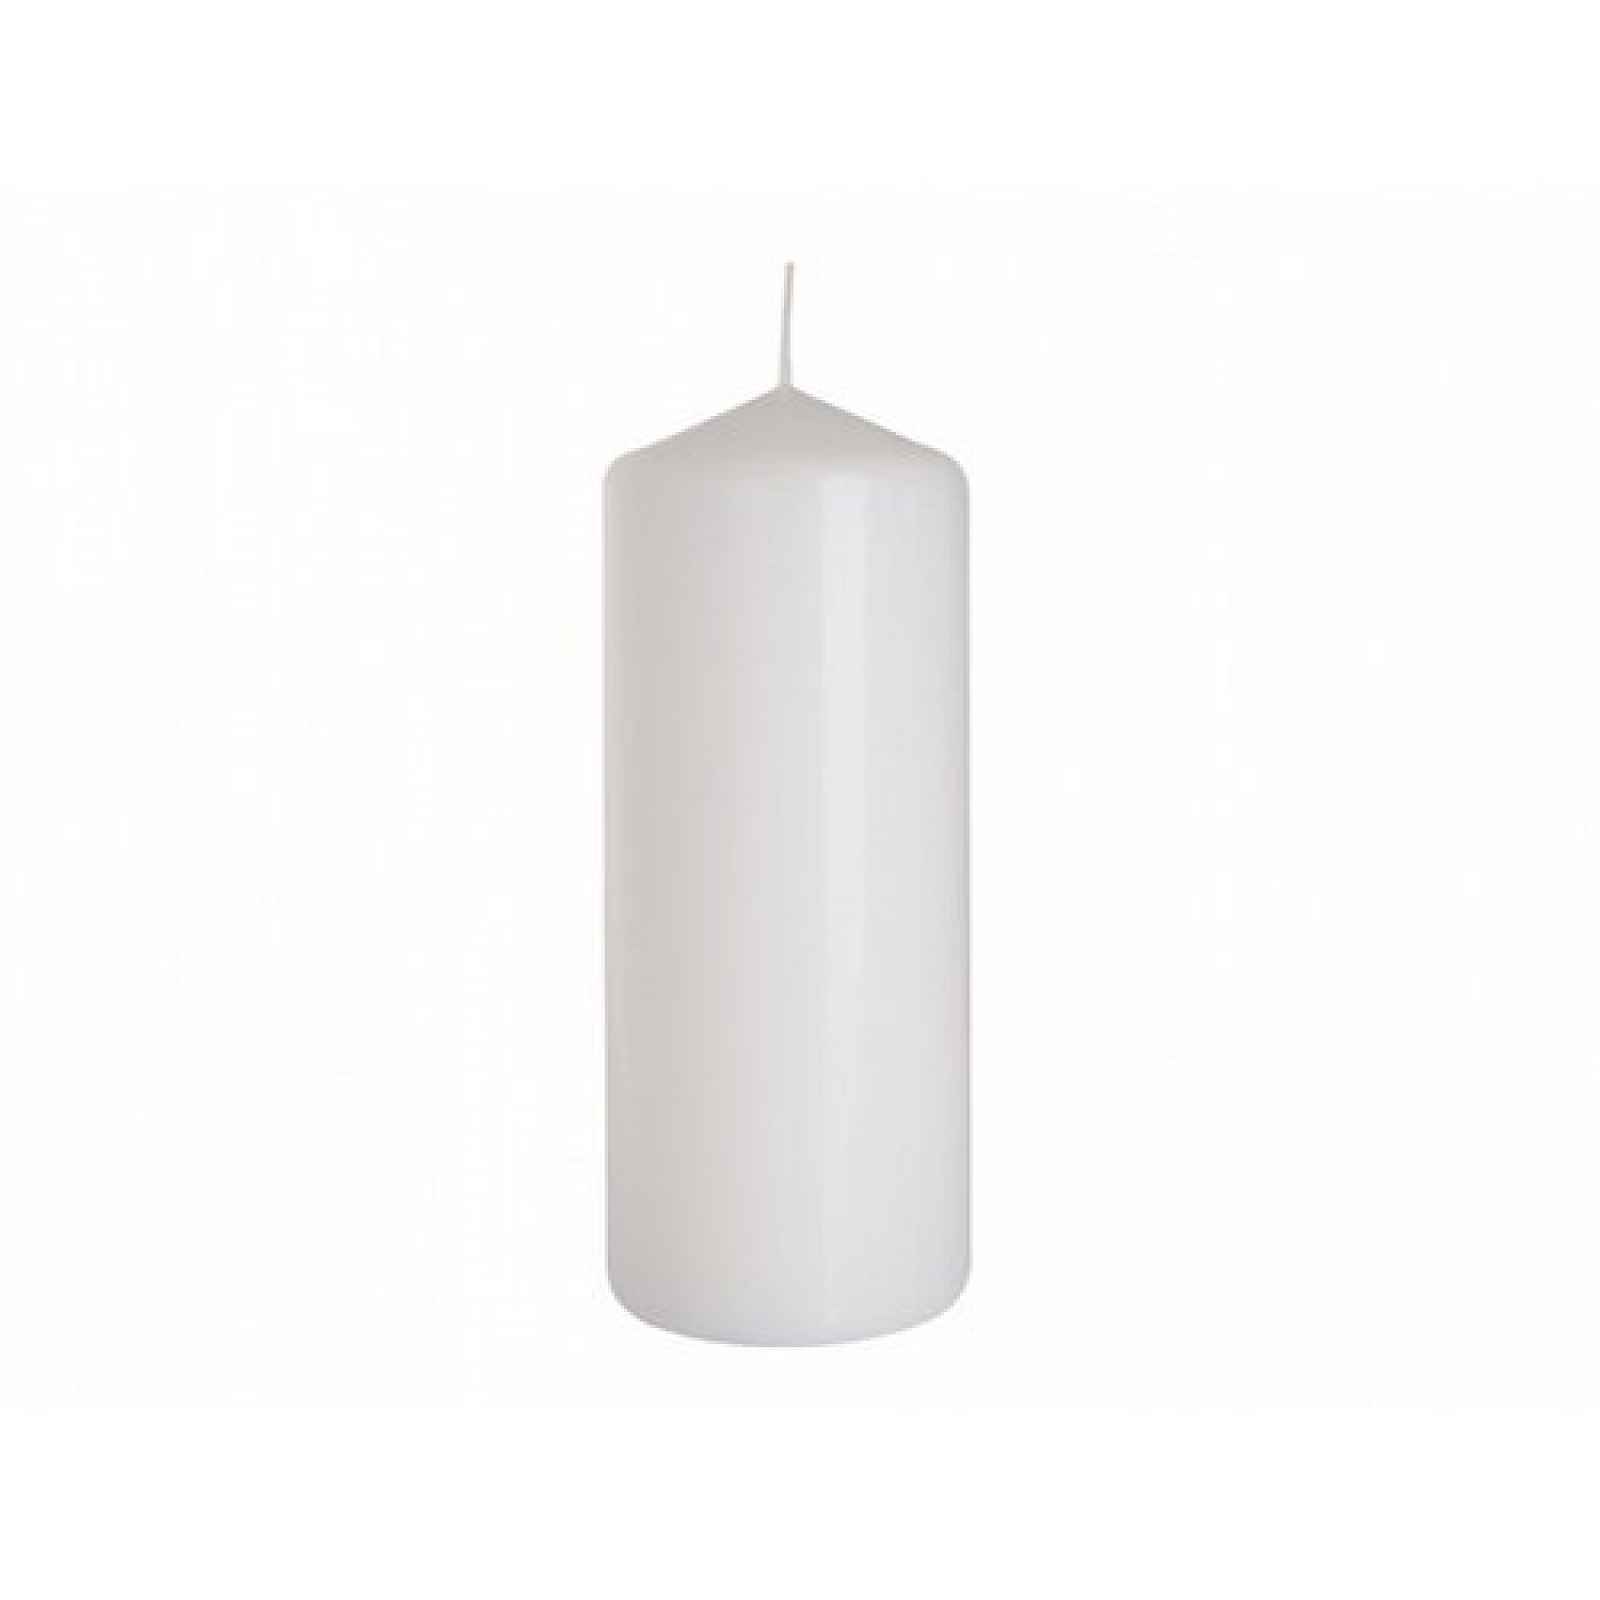 Dekorativní svíčka Classic Maxi bílá, 25 cm, 25 cm